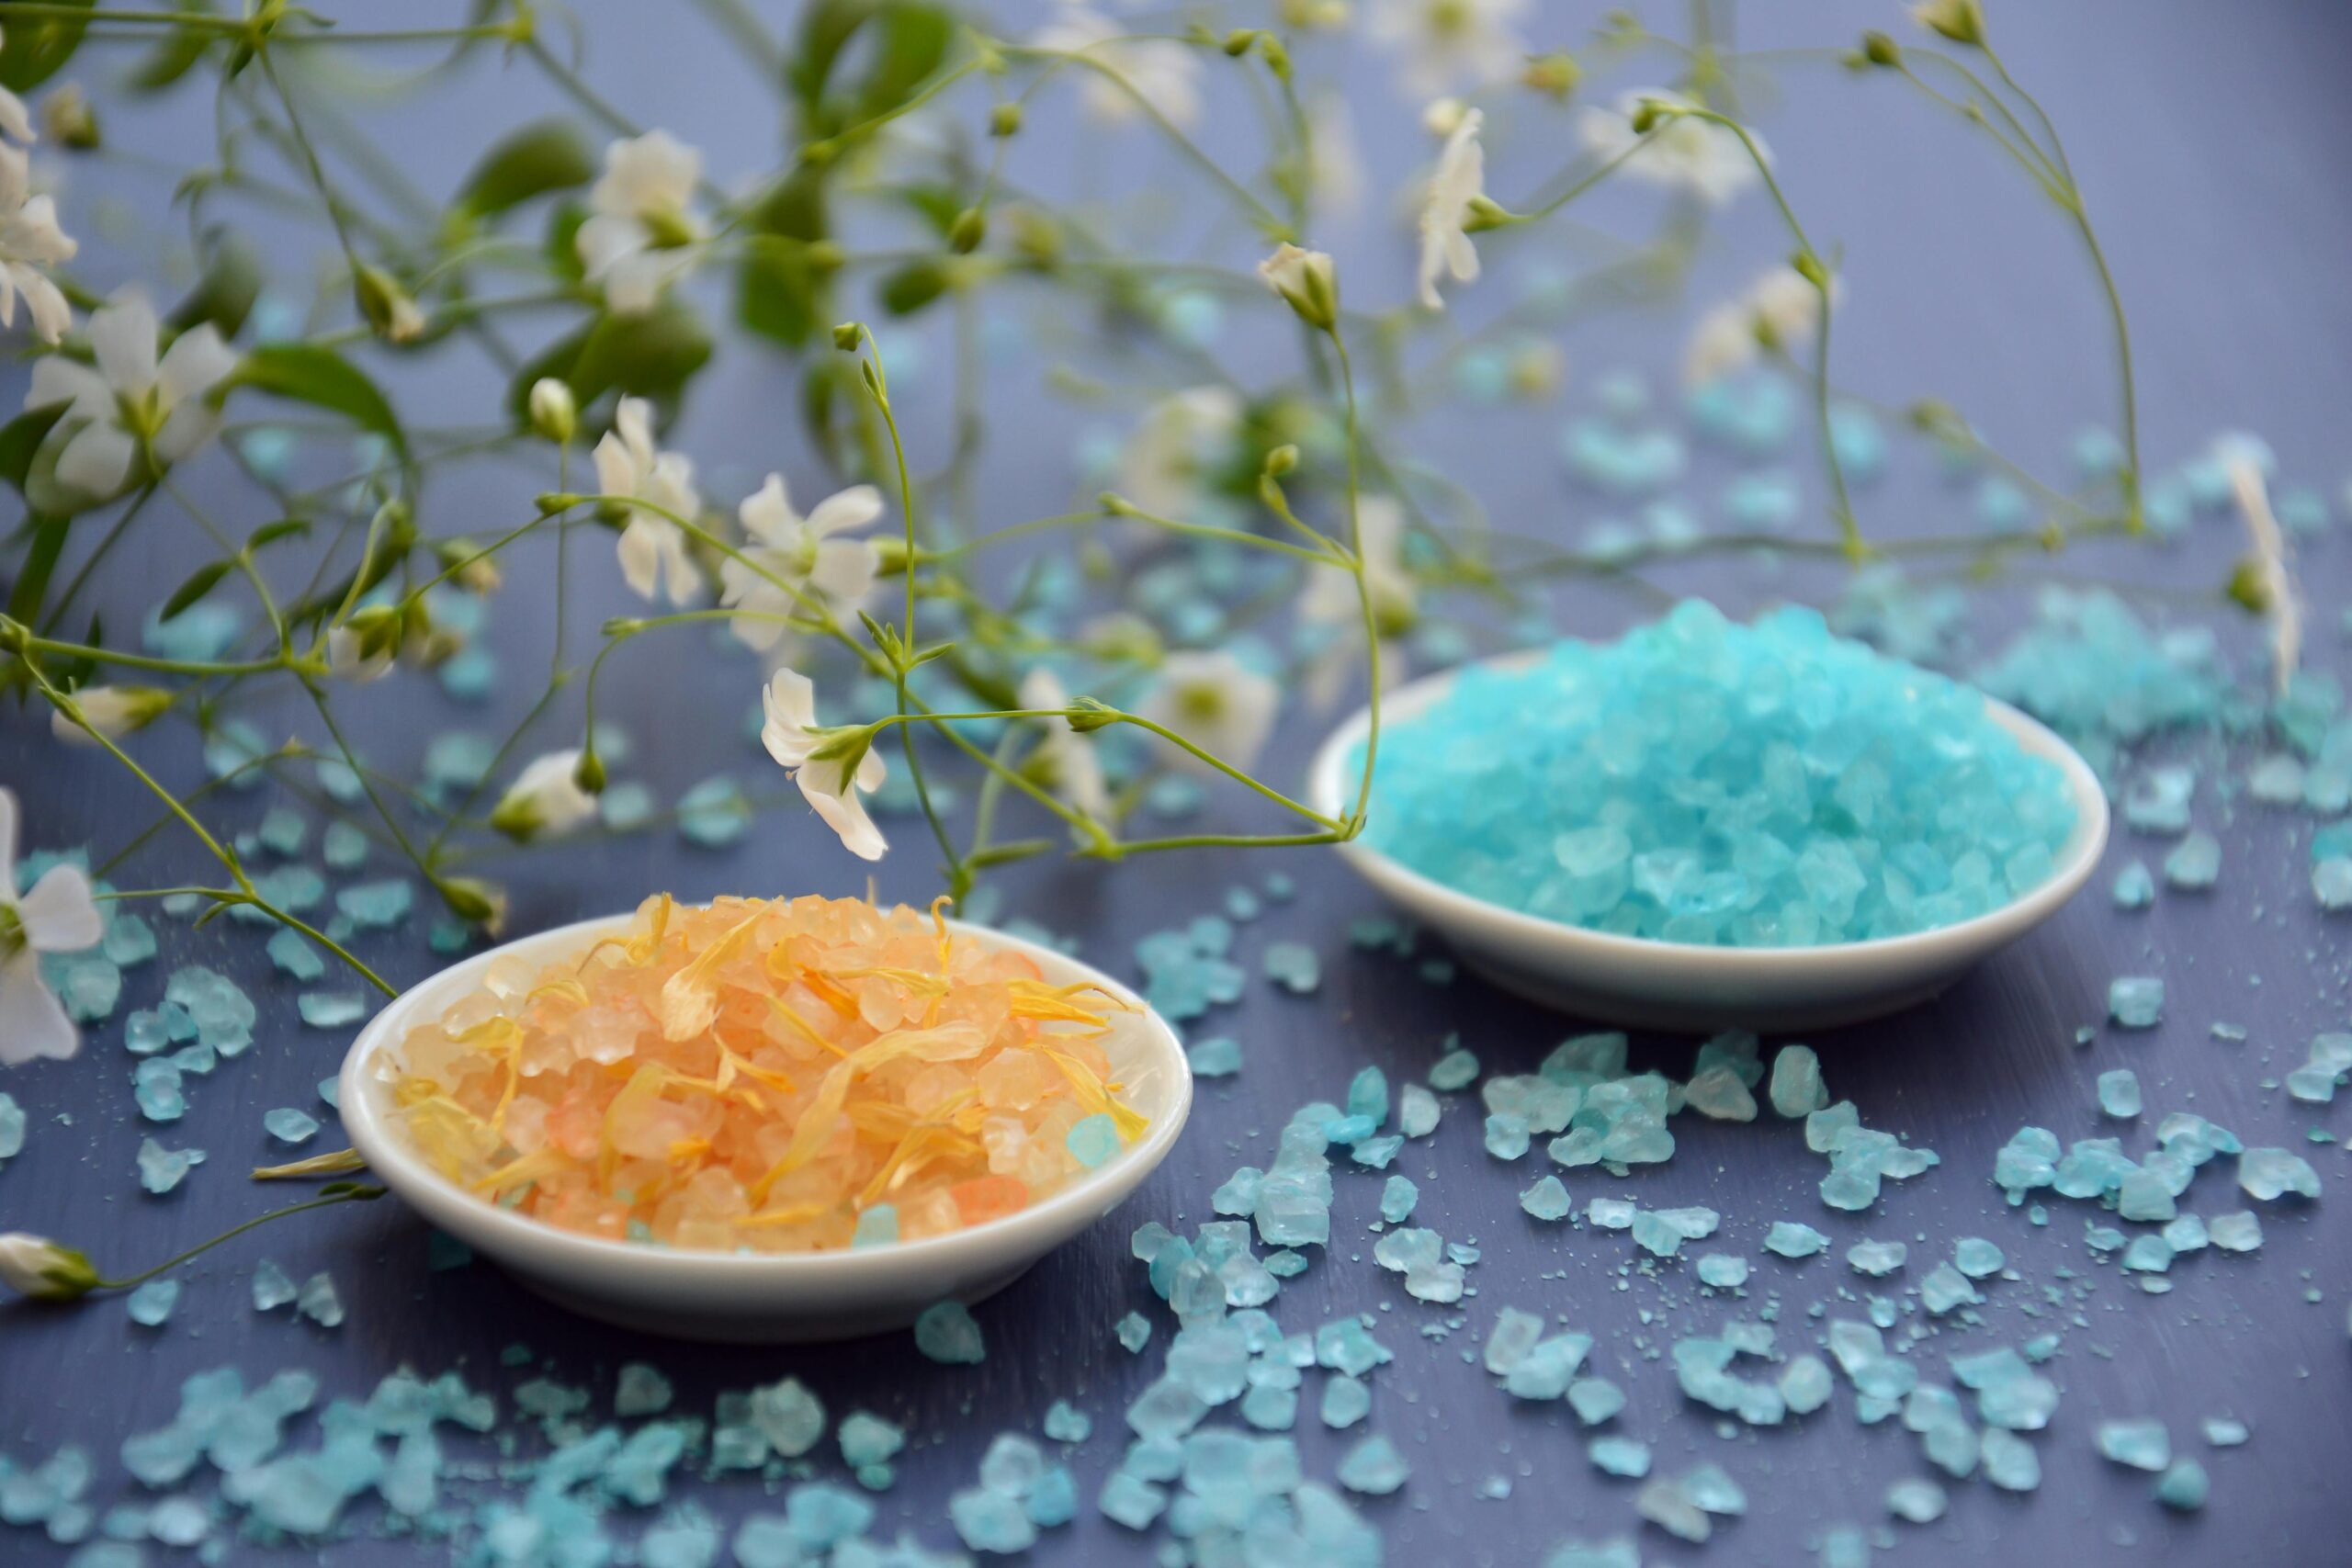 How to Make a Himalayan Salt Scrub for Glowing Skin